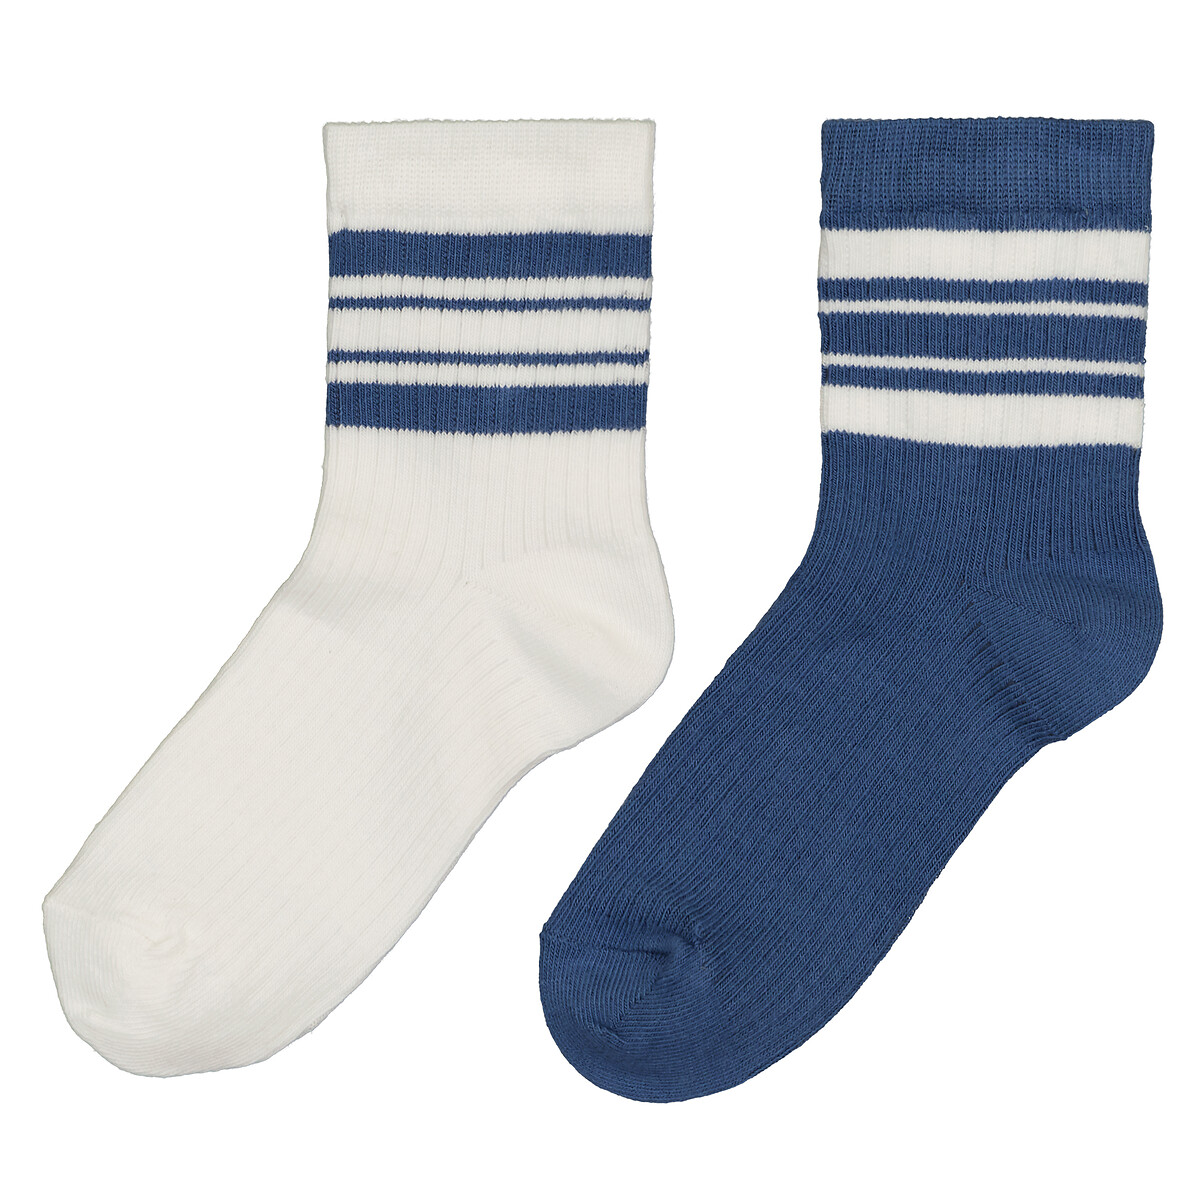 Комплект из двух пар носков LaRedoute синего цвета